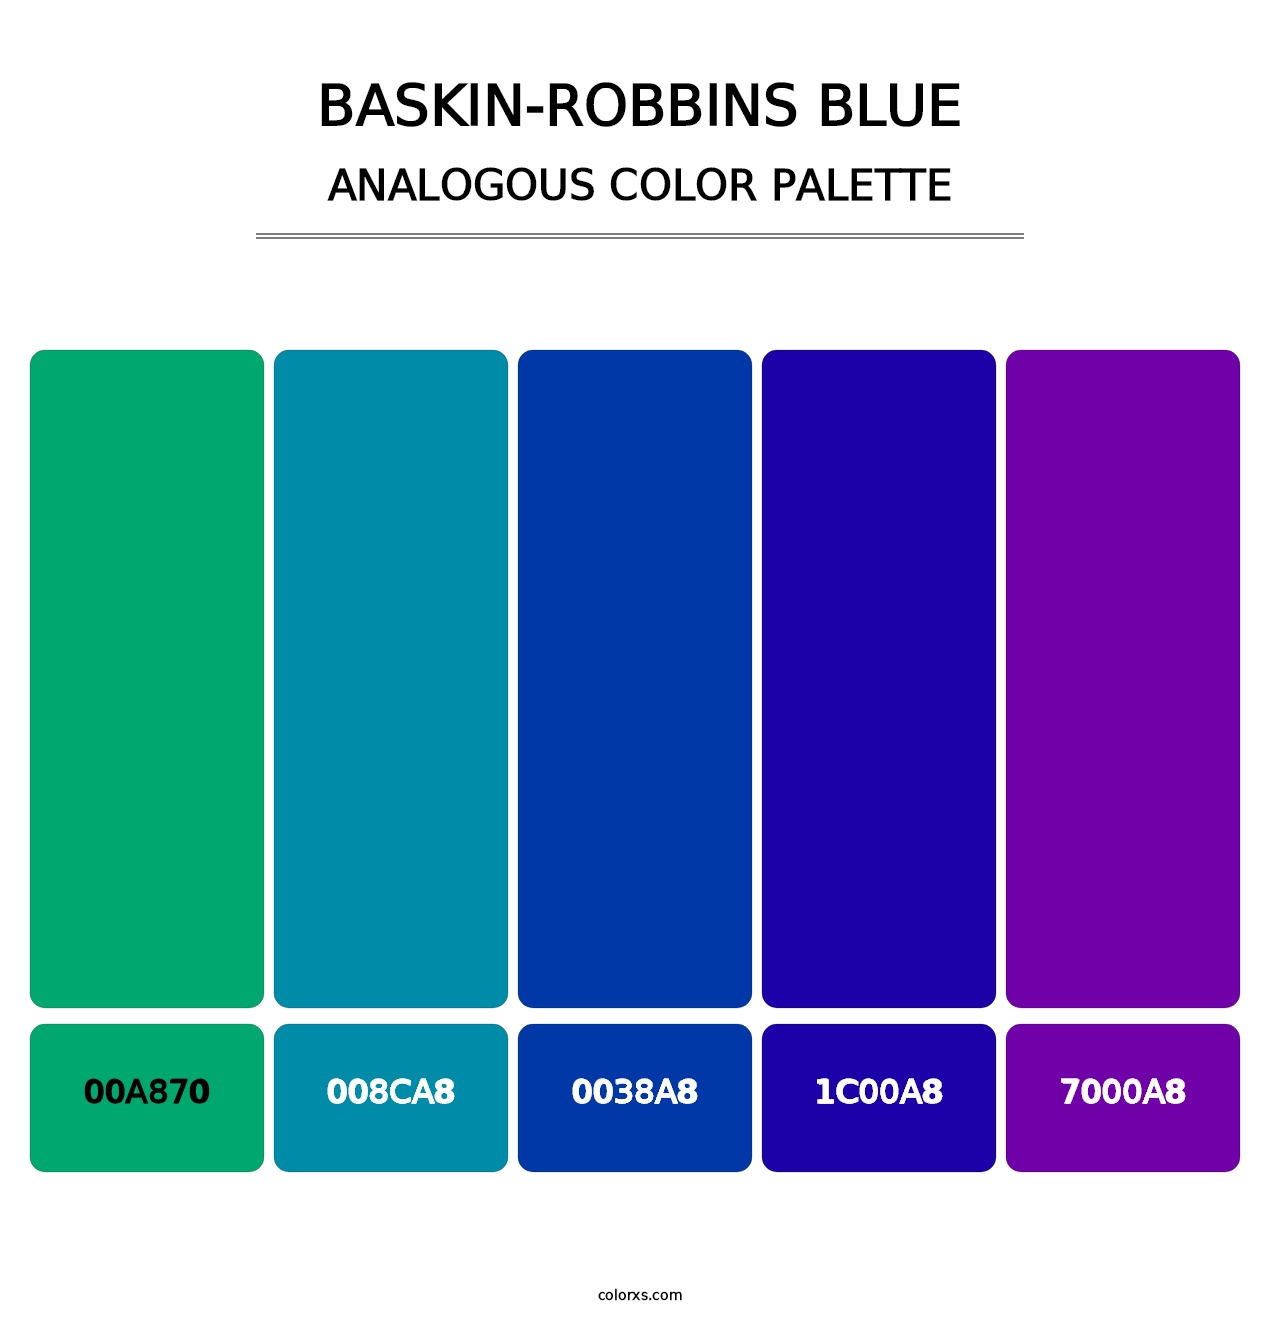 Baskin-Robbins Blue - Analogous Color Palette